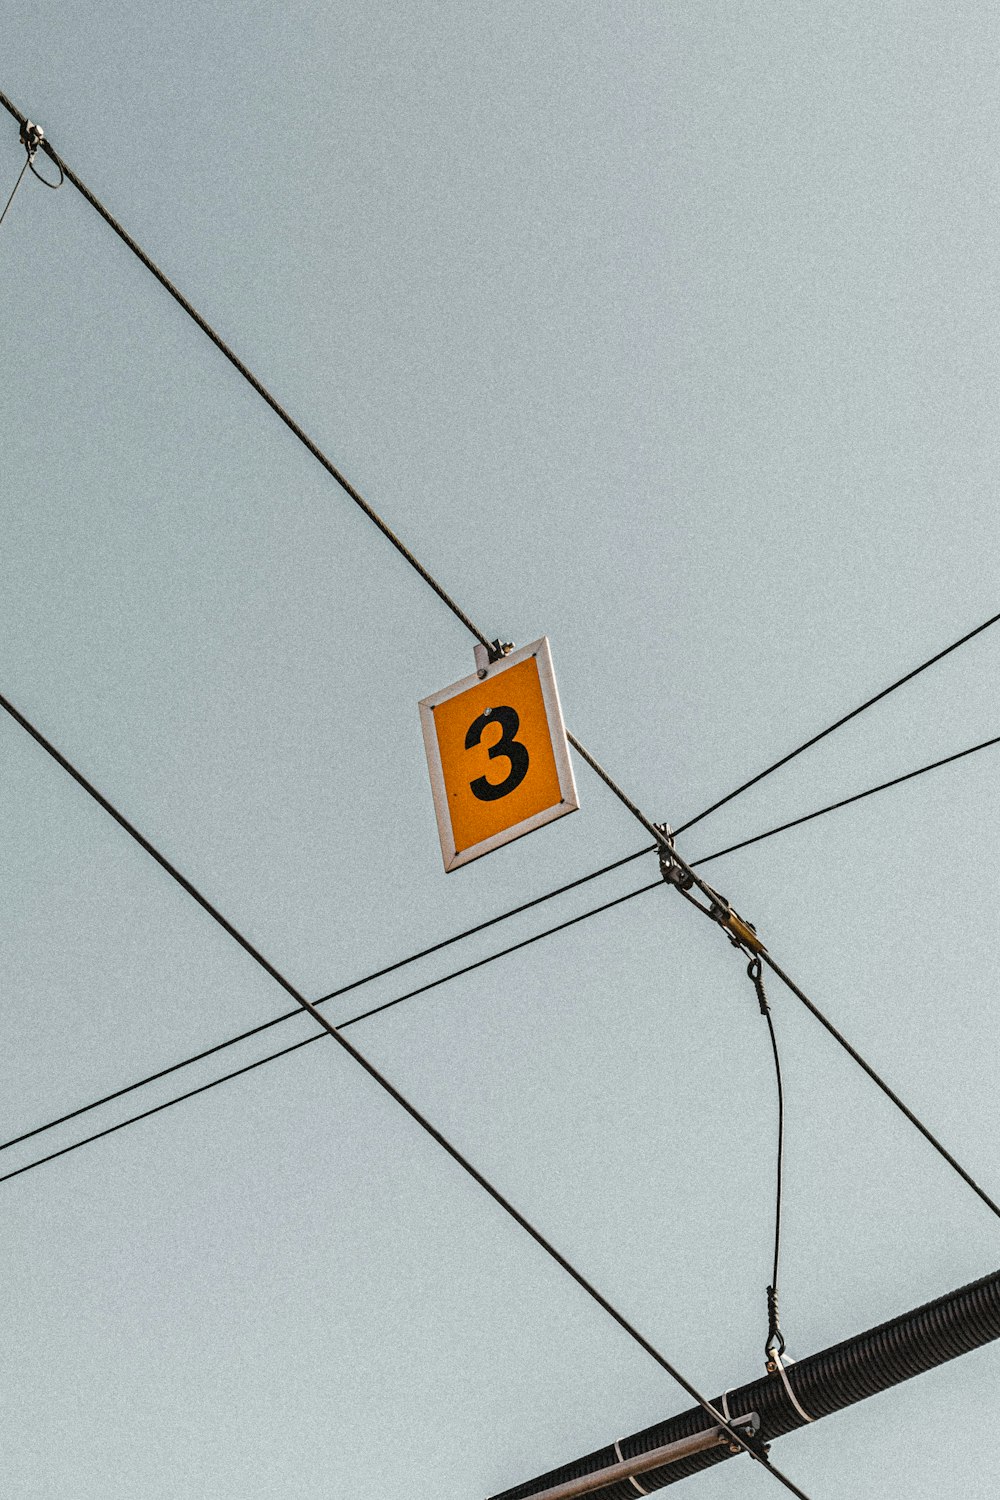 Letrero amarillo 3 colgando del cable